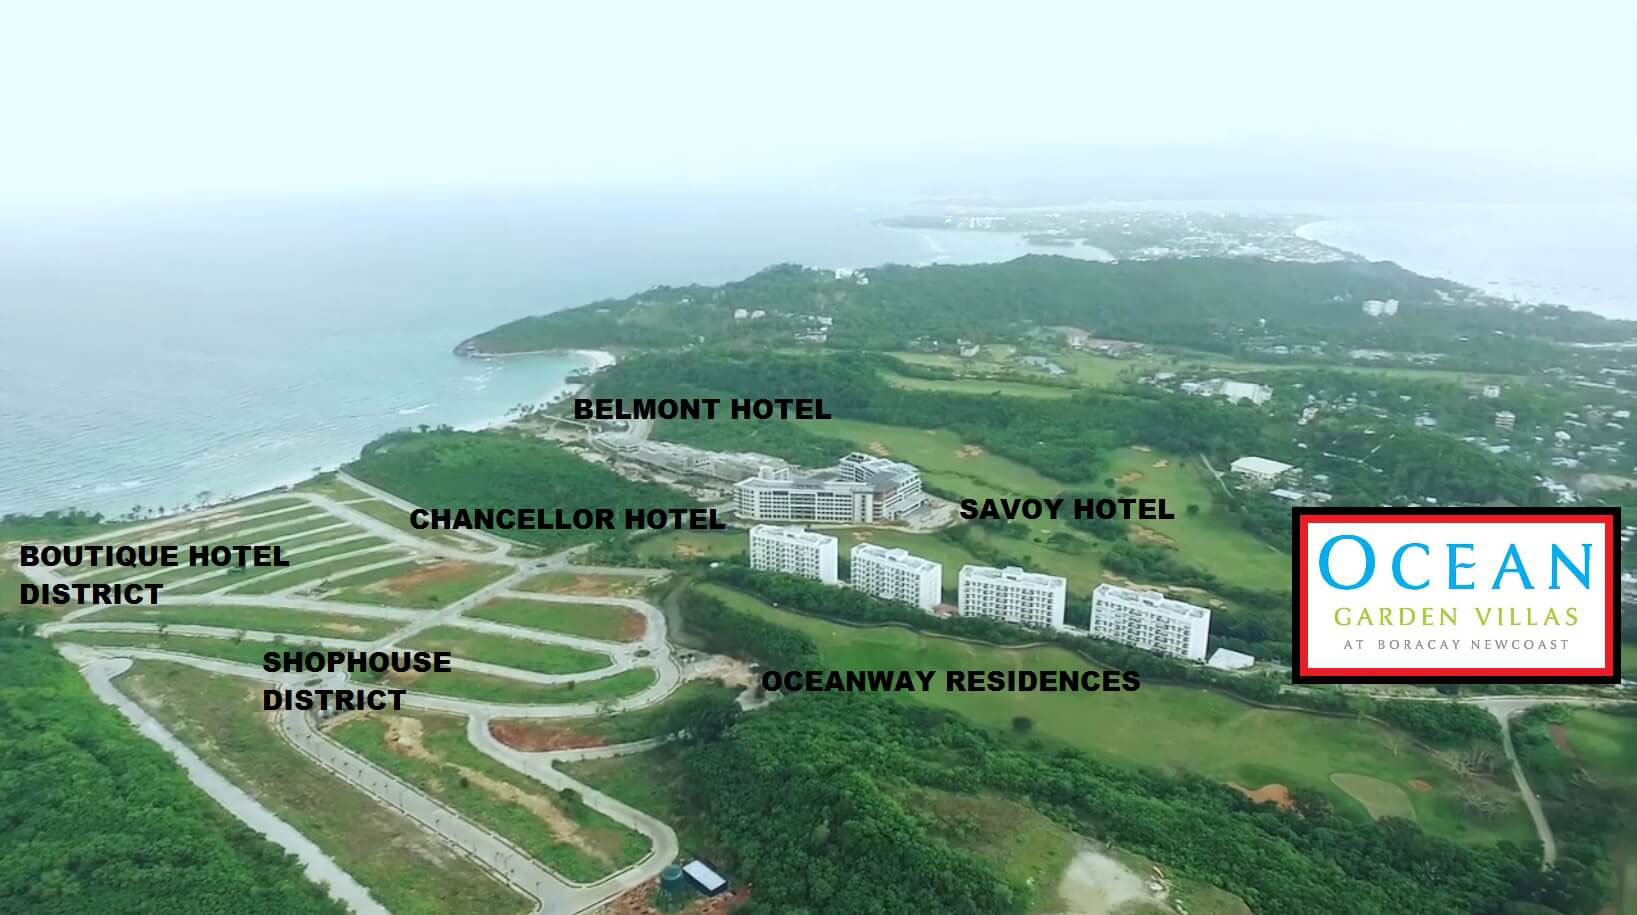 http://megaworldfort.com.ph/wp-content/uploads/2018/10/ocean-garden-villas-site-development-plan.jpg